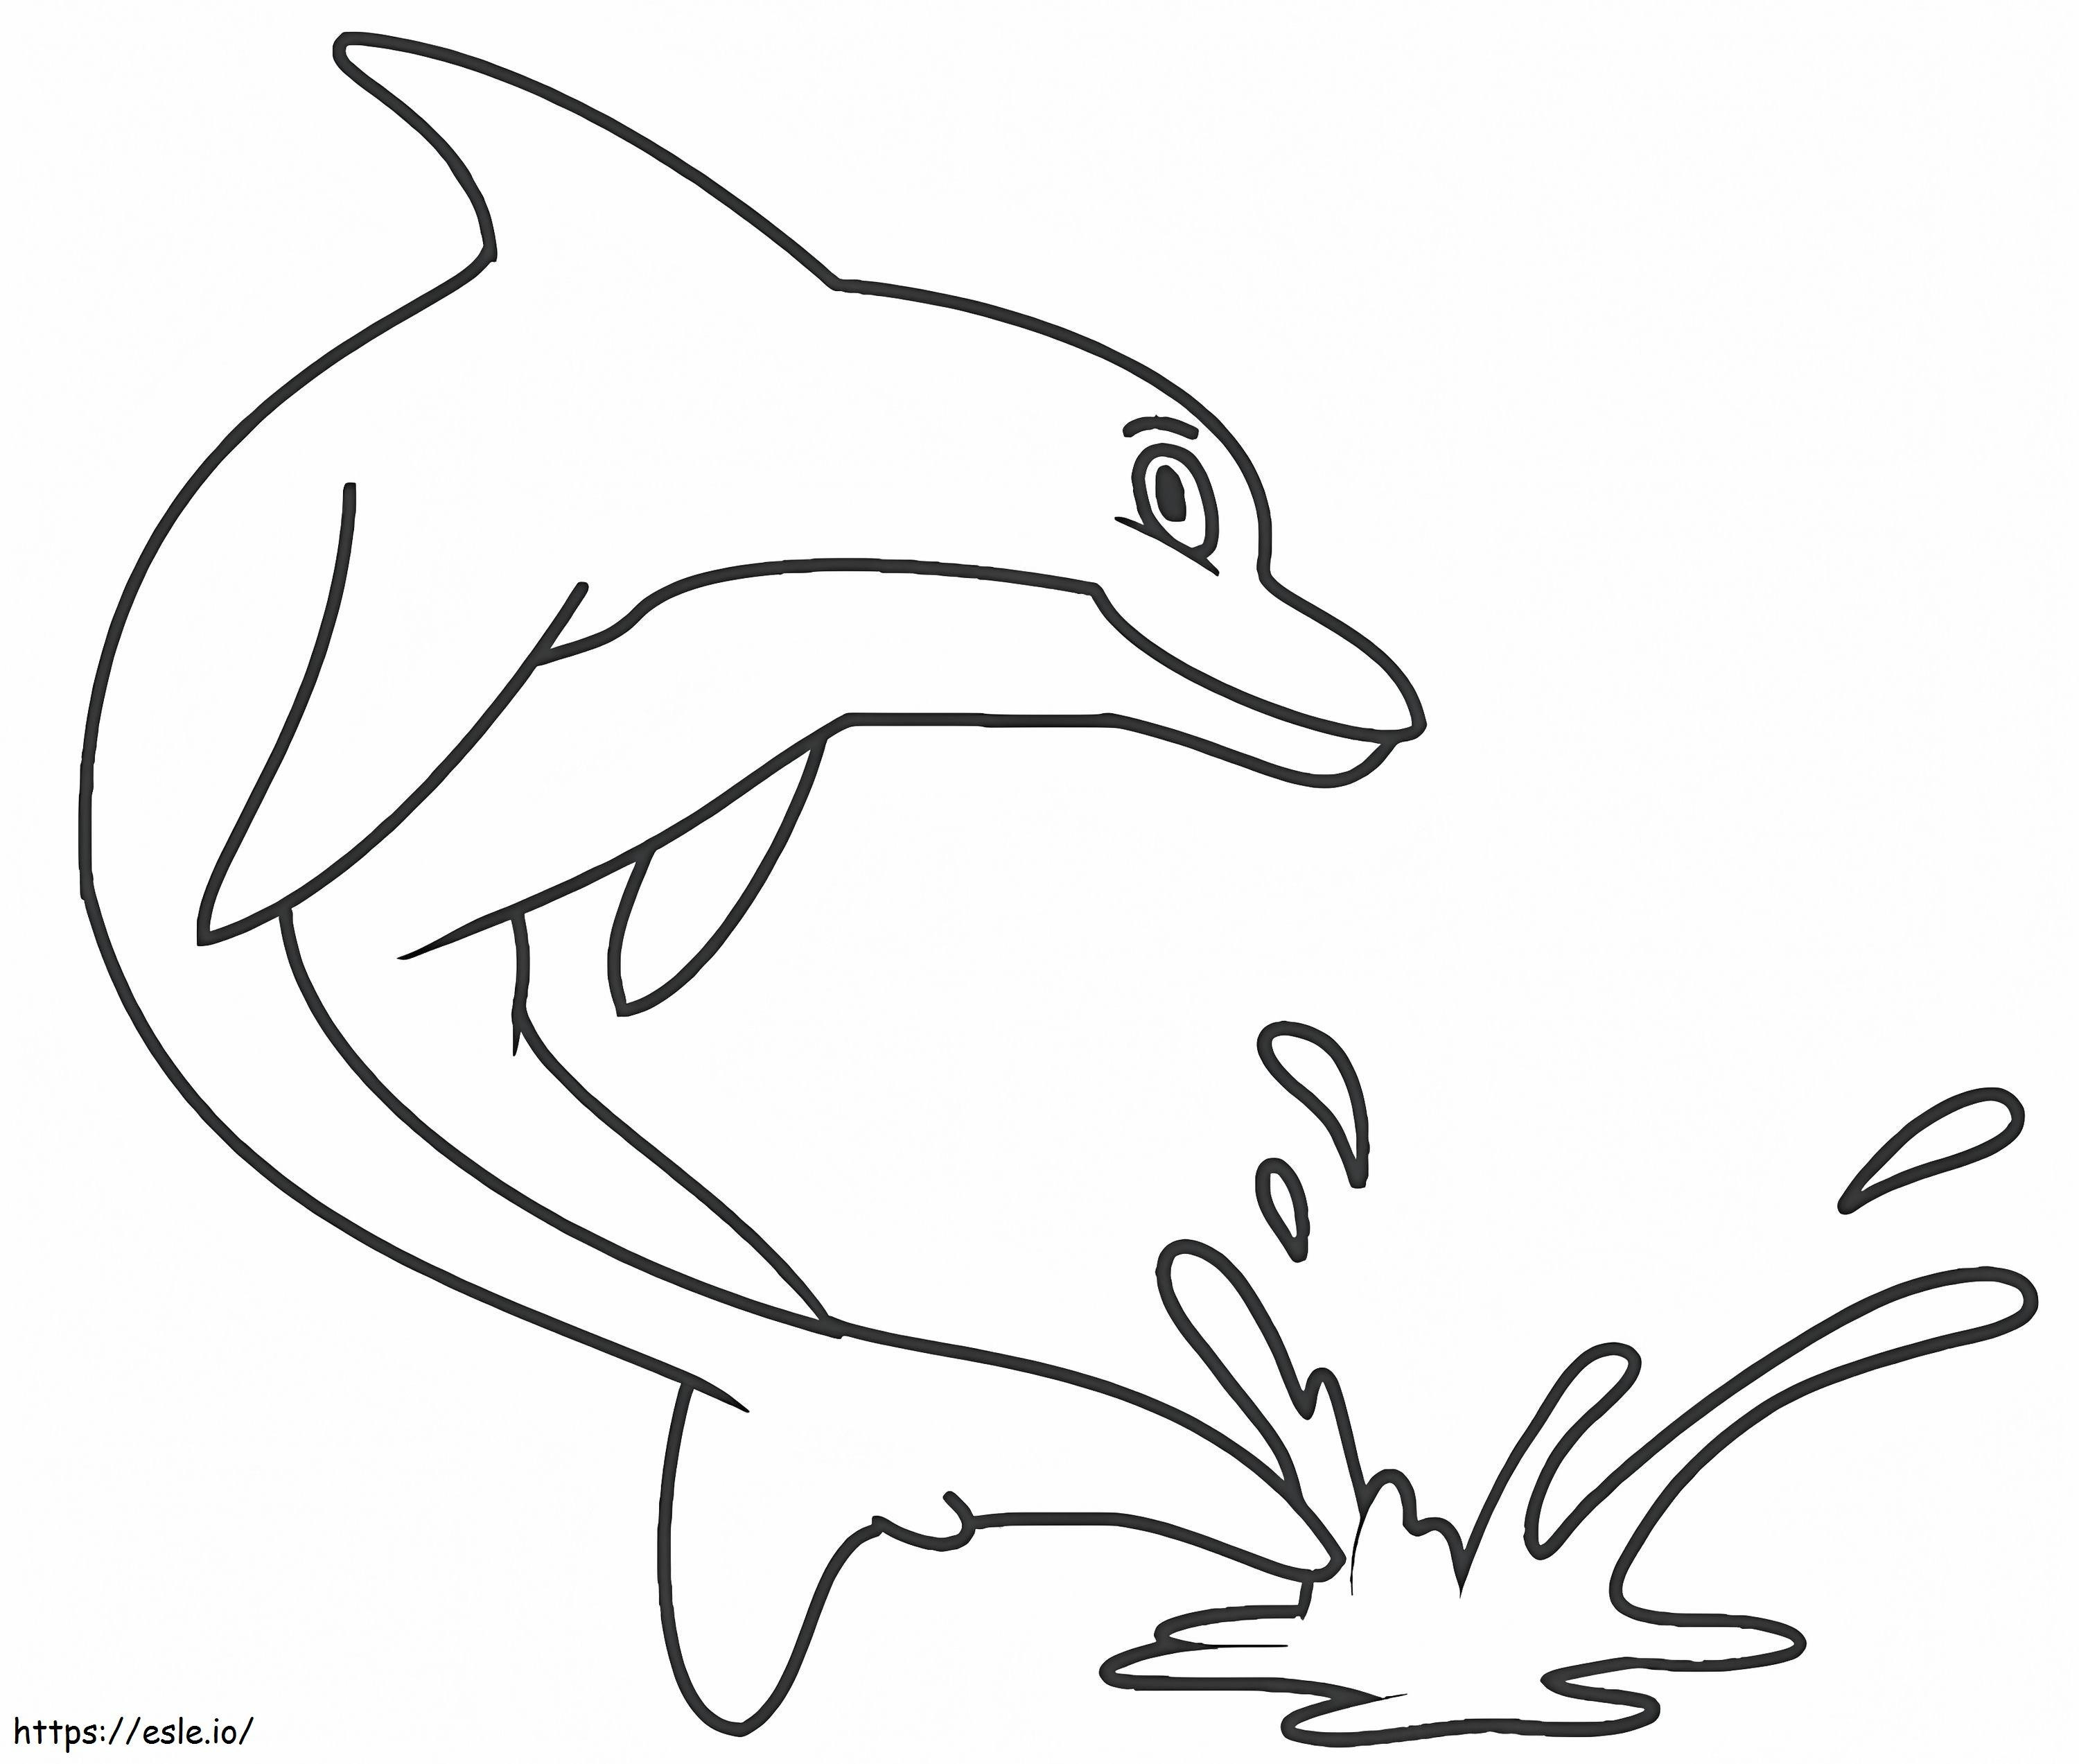 Delfin skacze kolorowanka